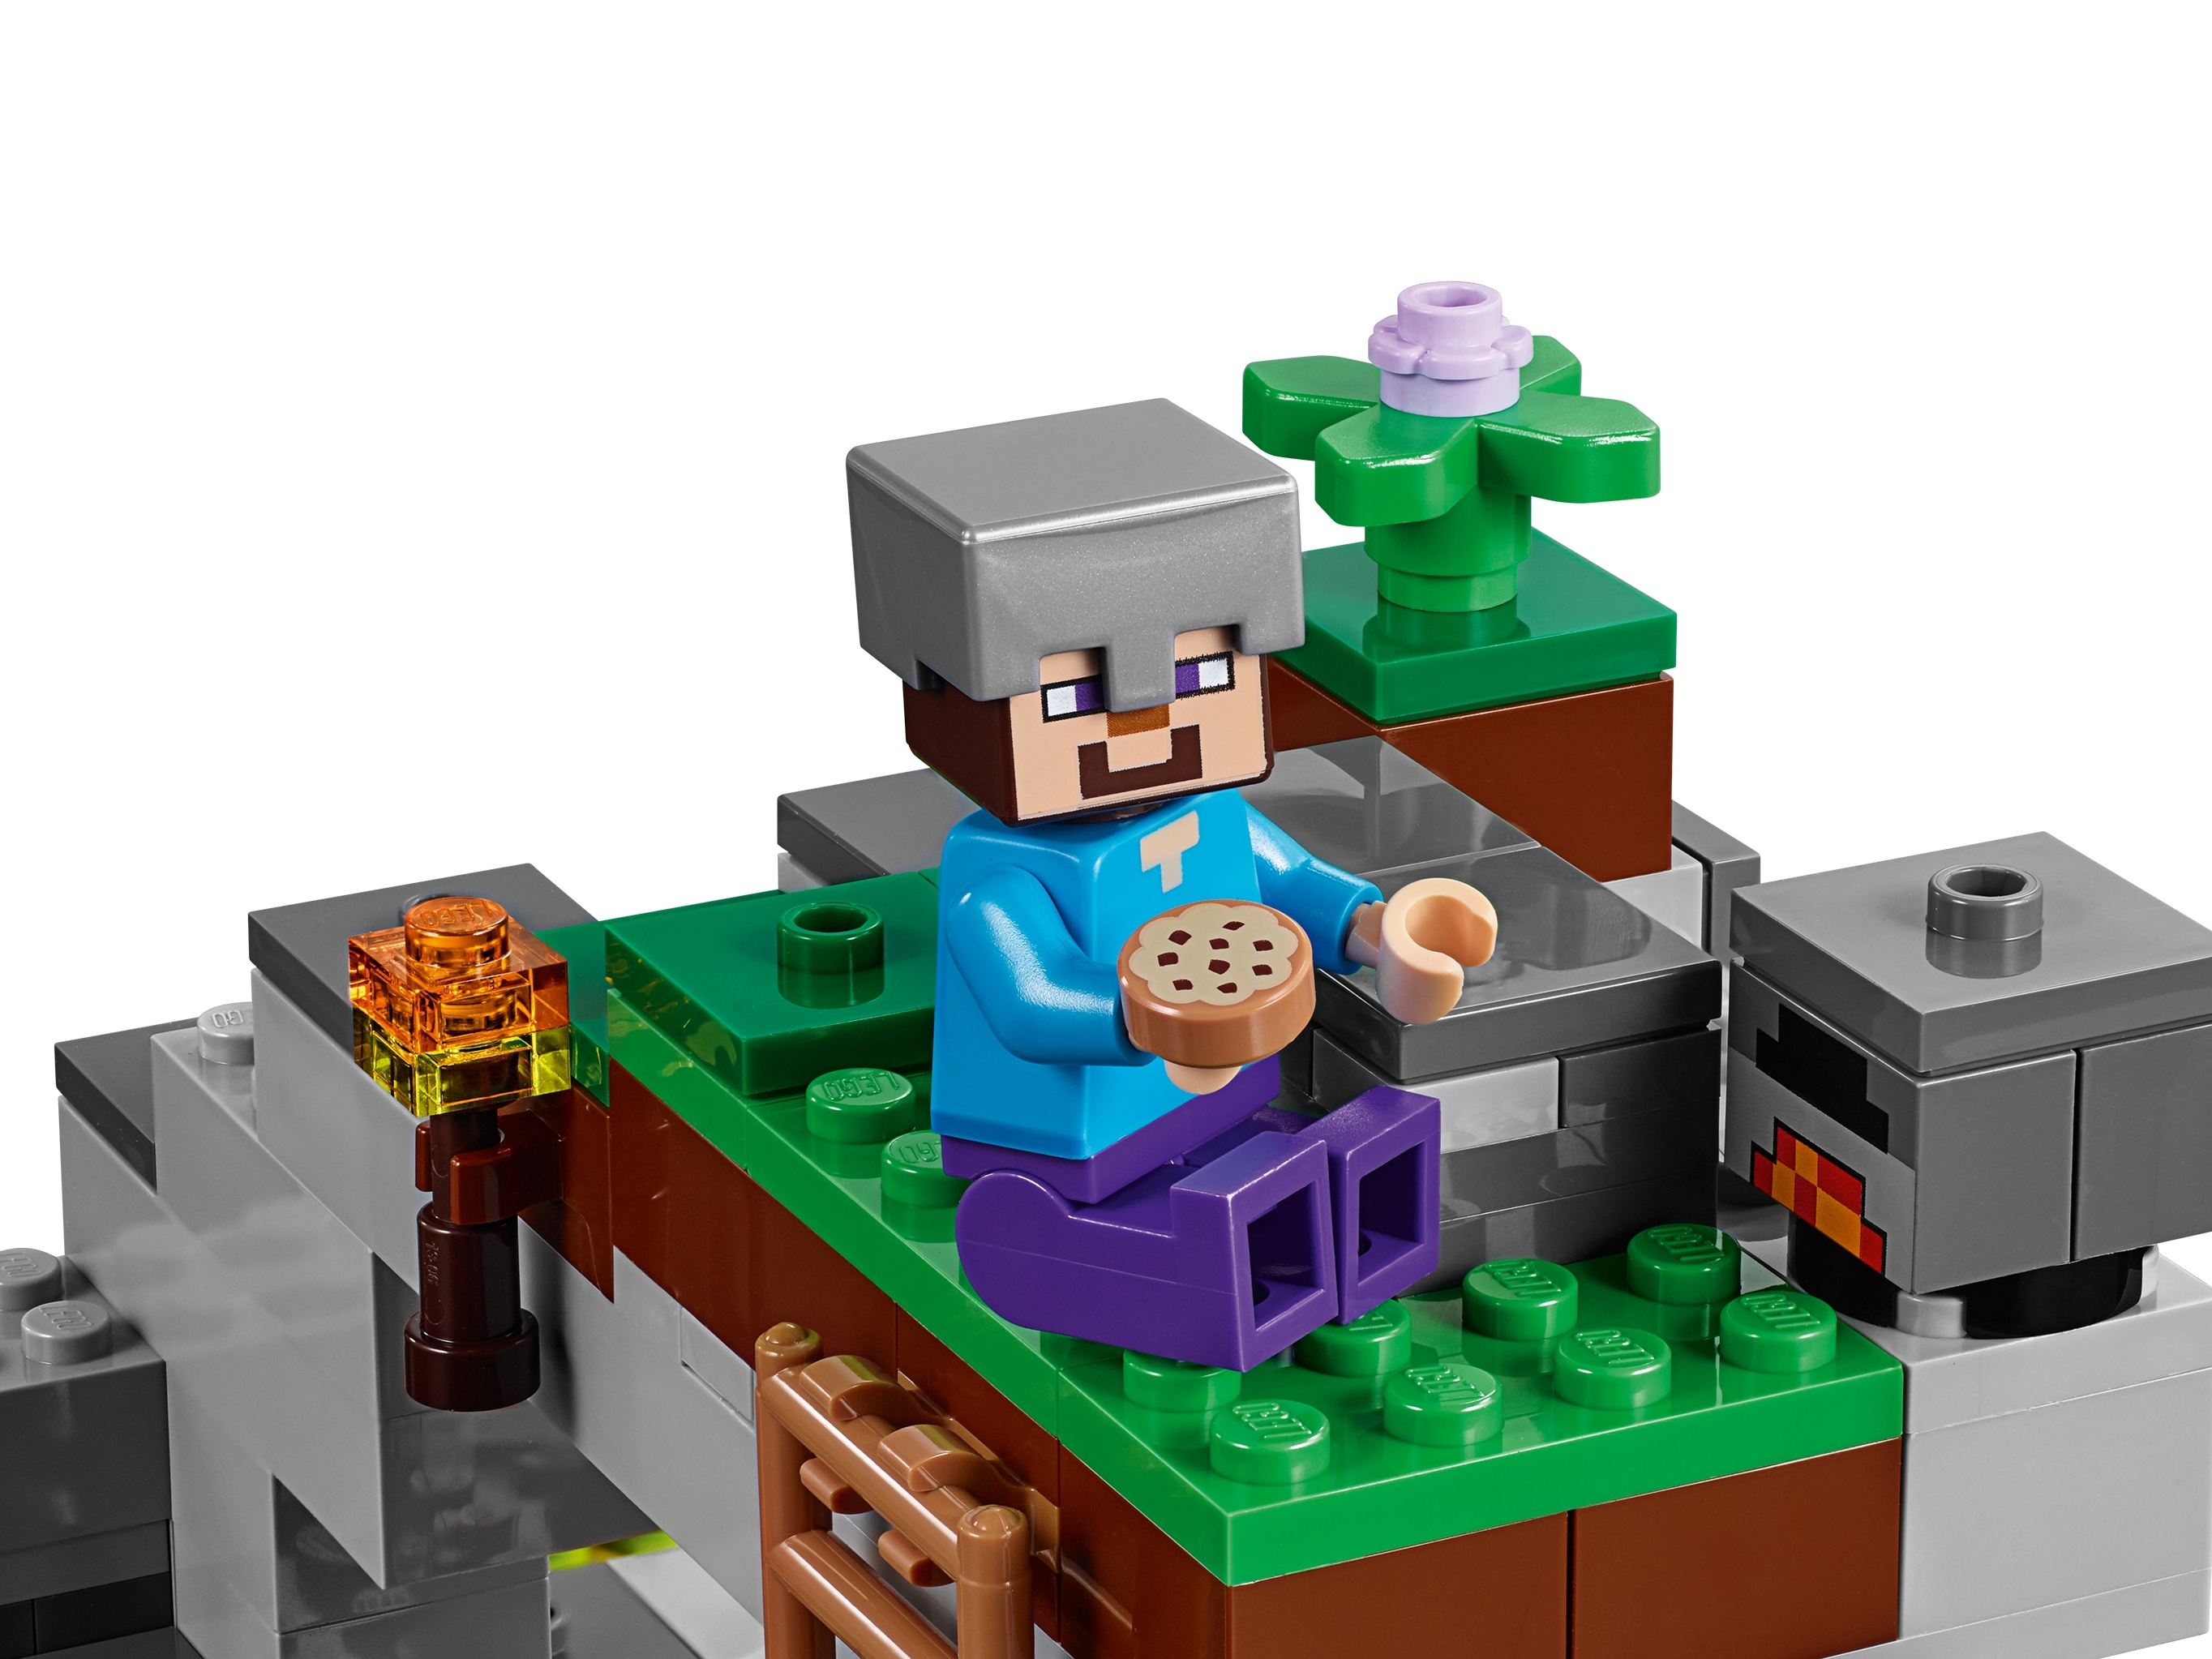 Lego ® MinecraftFigure Zombie from set 21141NewMIN010 